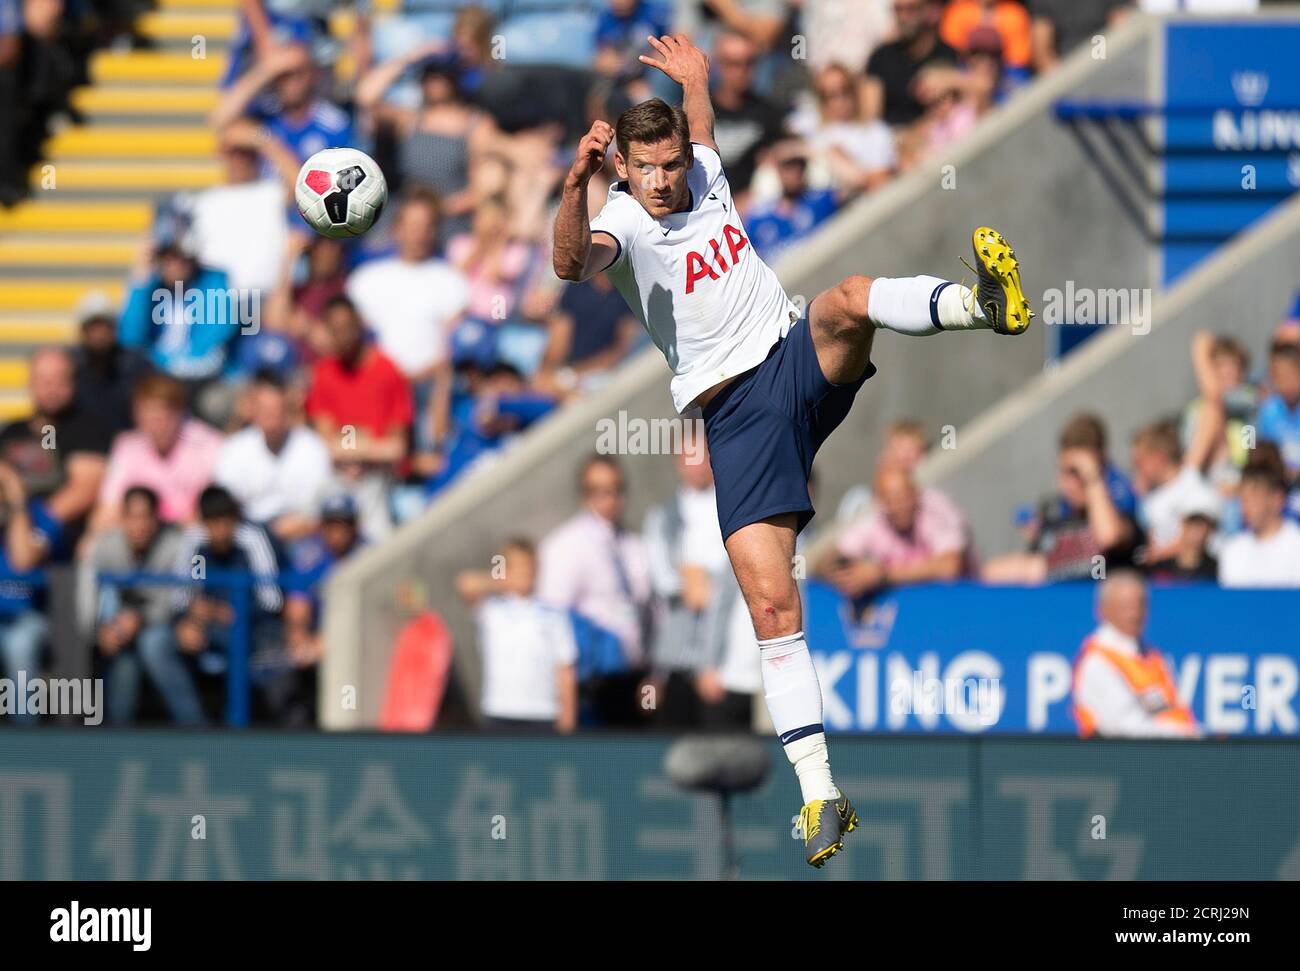 Tottenham Hotspurs' Jan Vertonghen PHOTO CREDIT : © MARK PAIN / ALAMY STOCK PHOTO Stock Photo